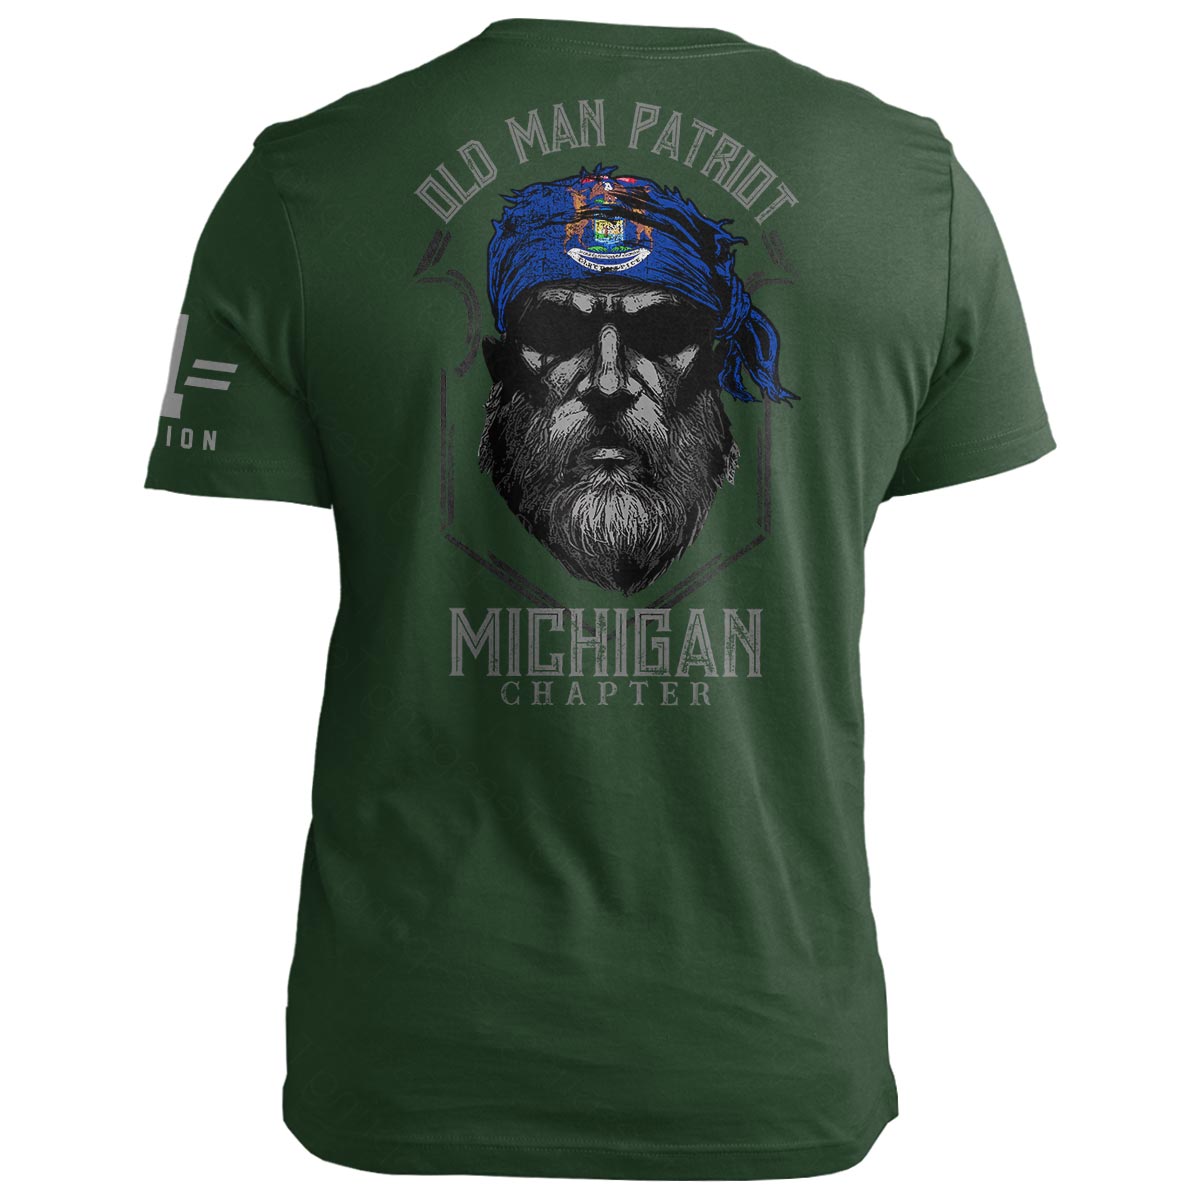 Michigan Old Man Patriot